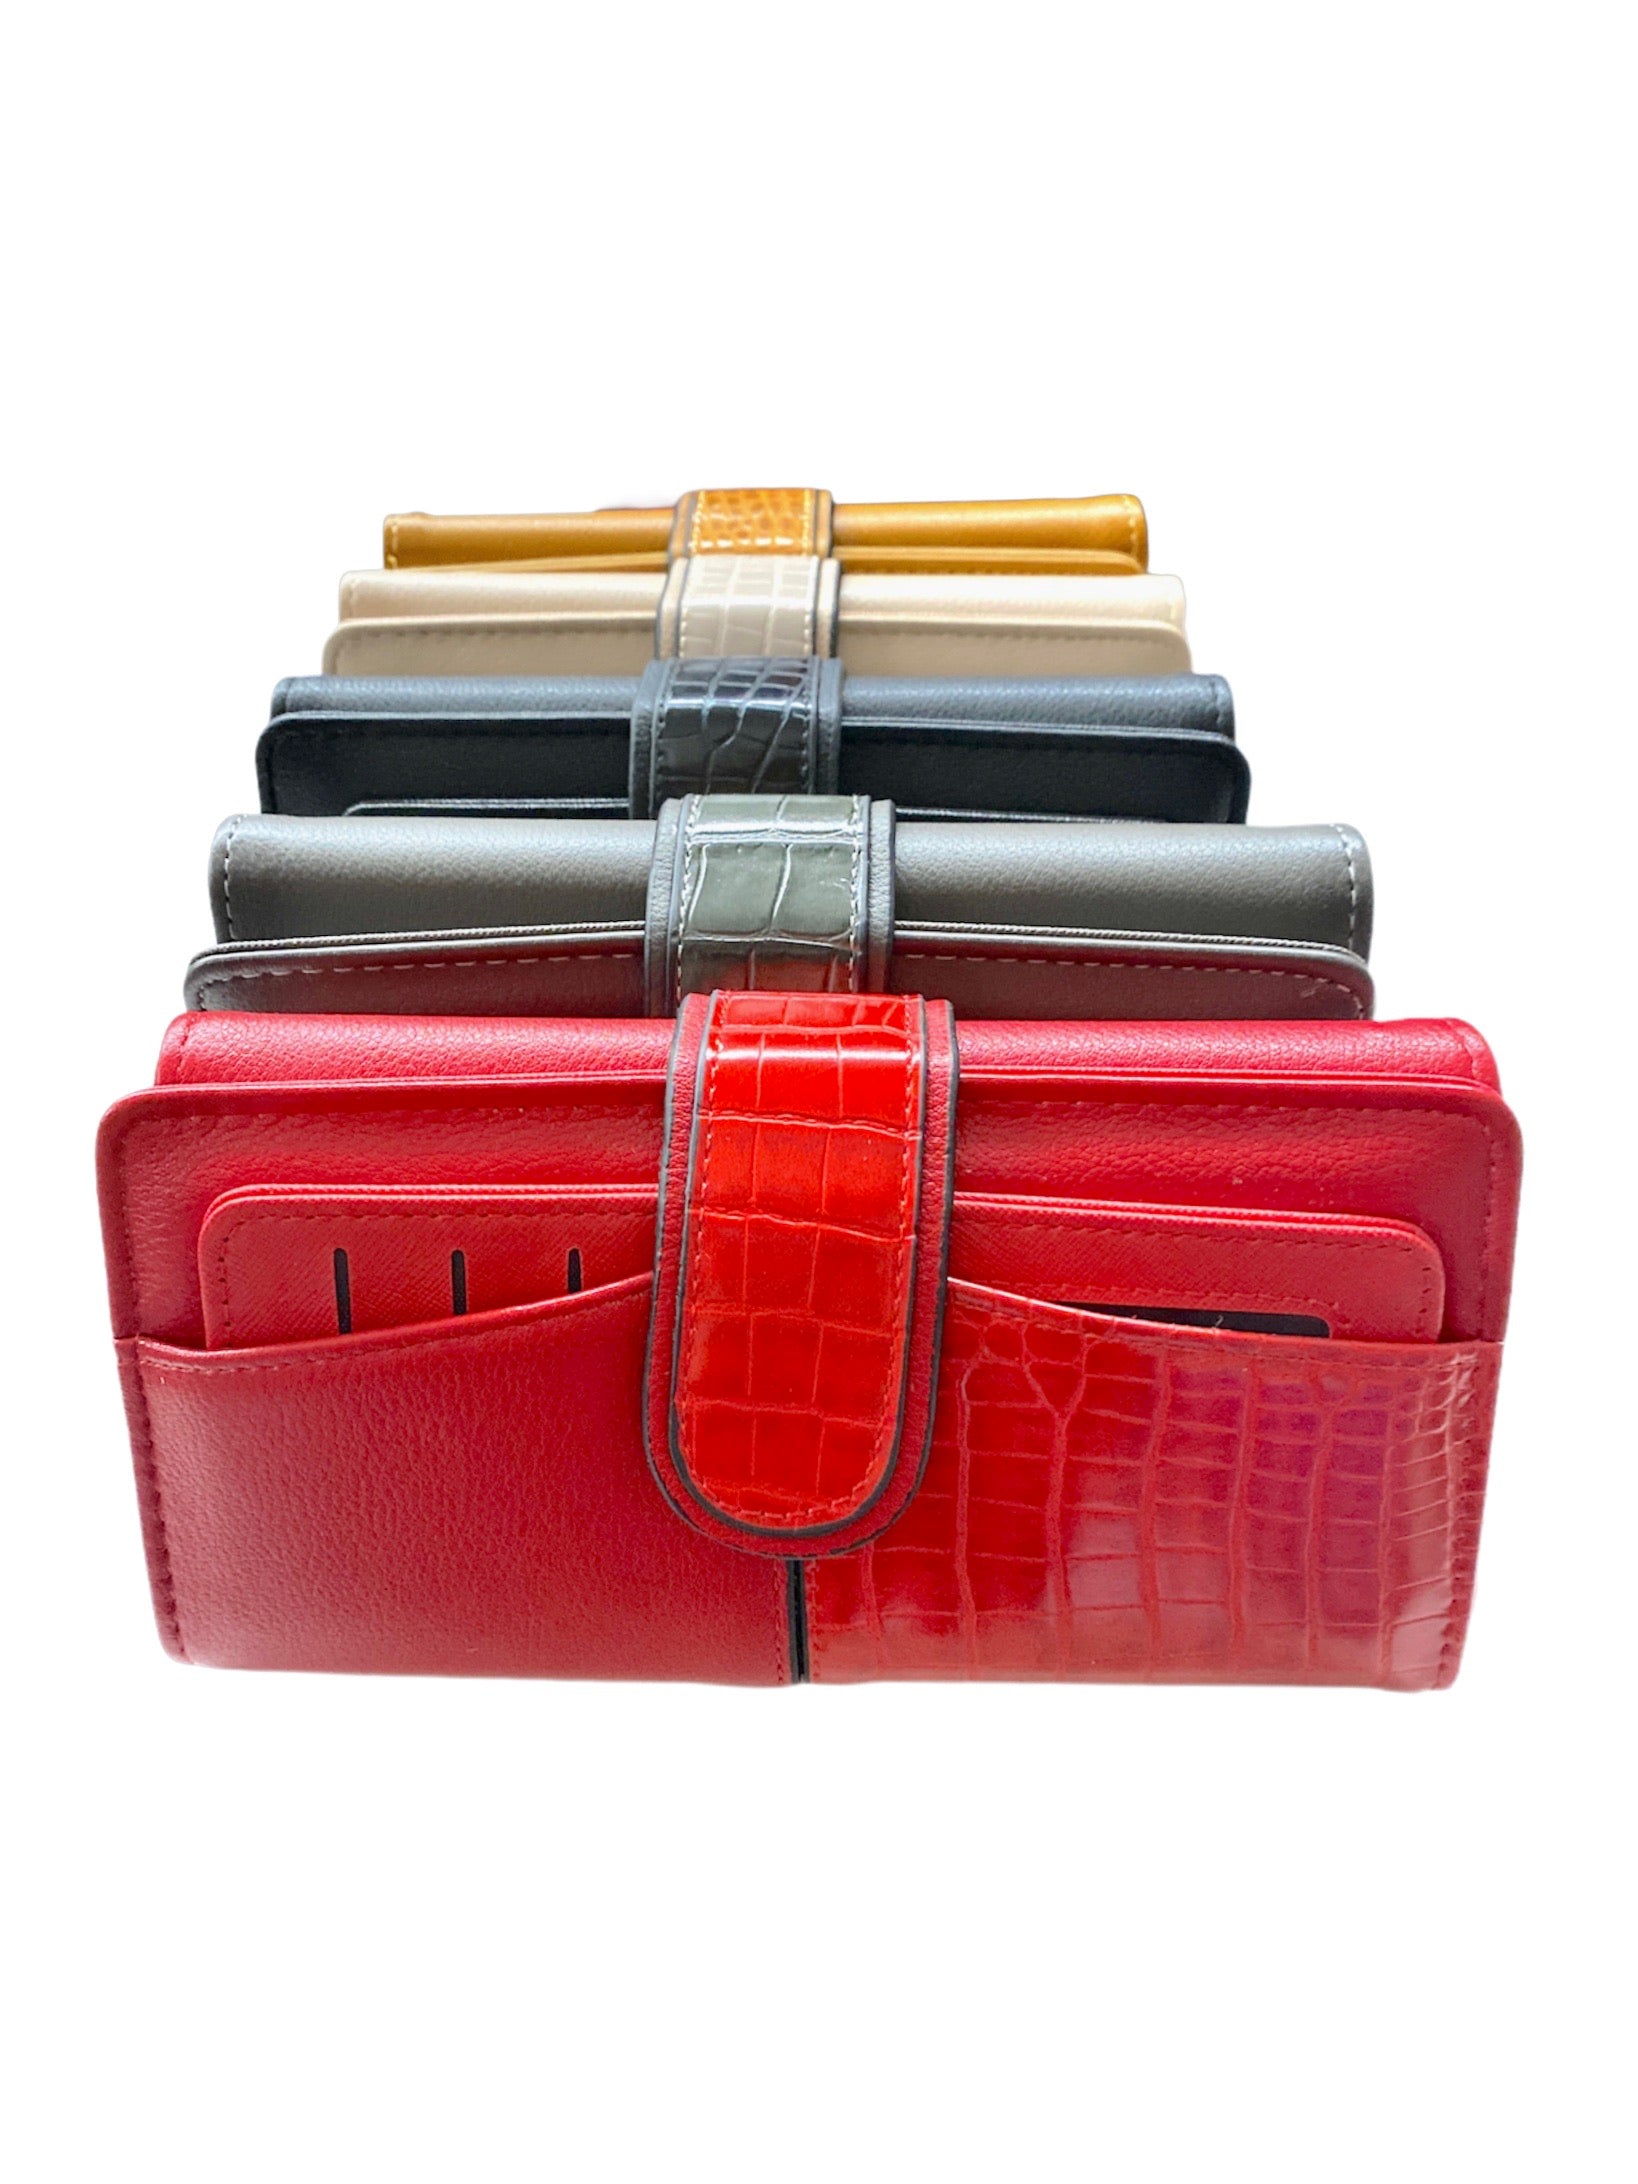 Companion wallets pouch (x6)